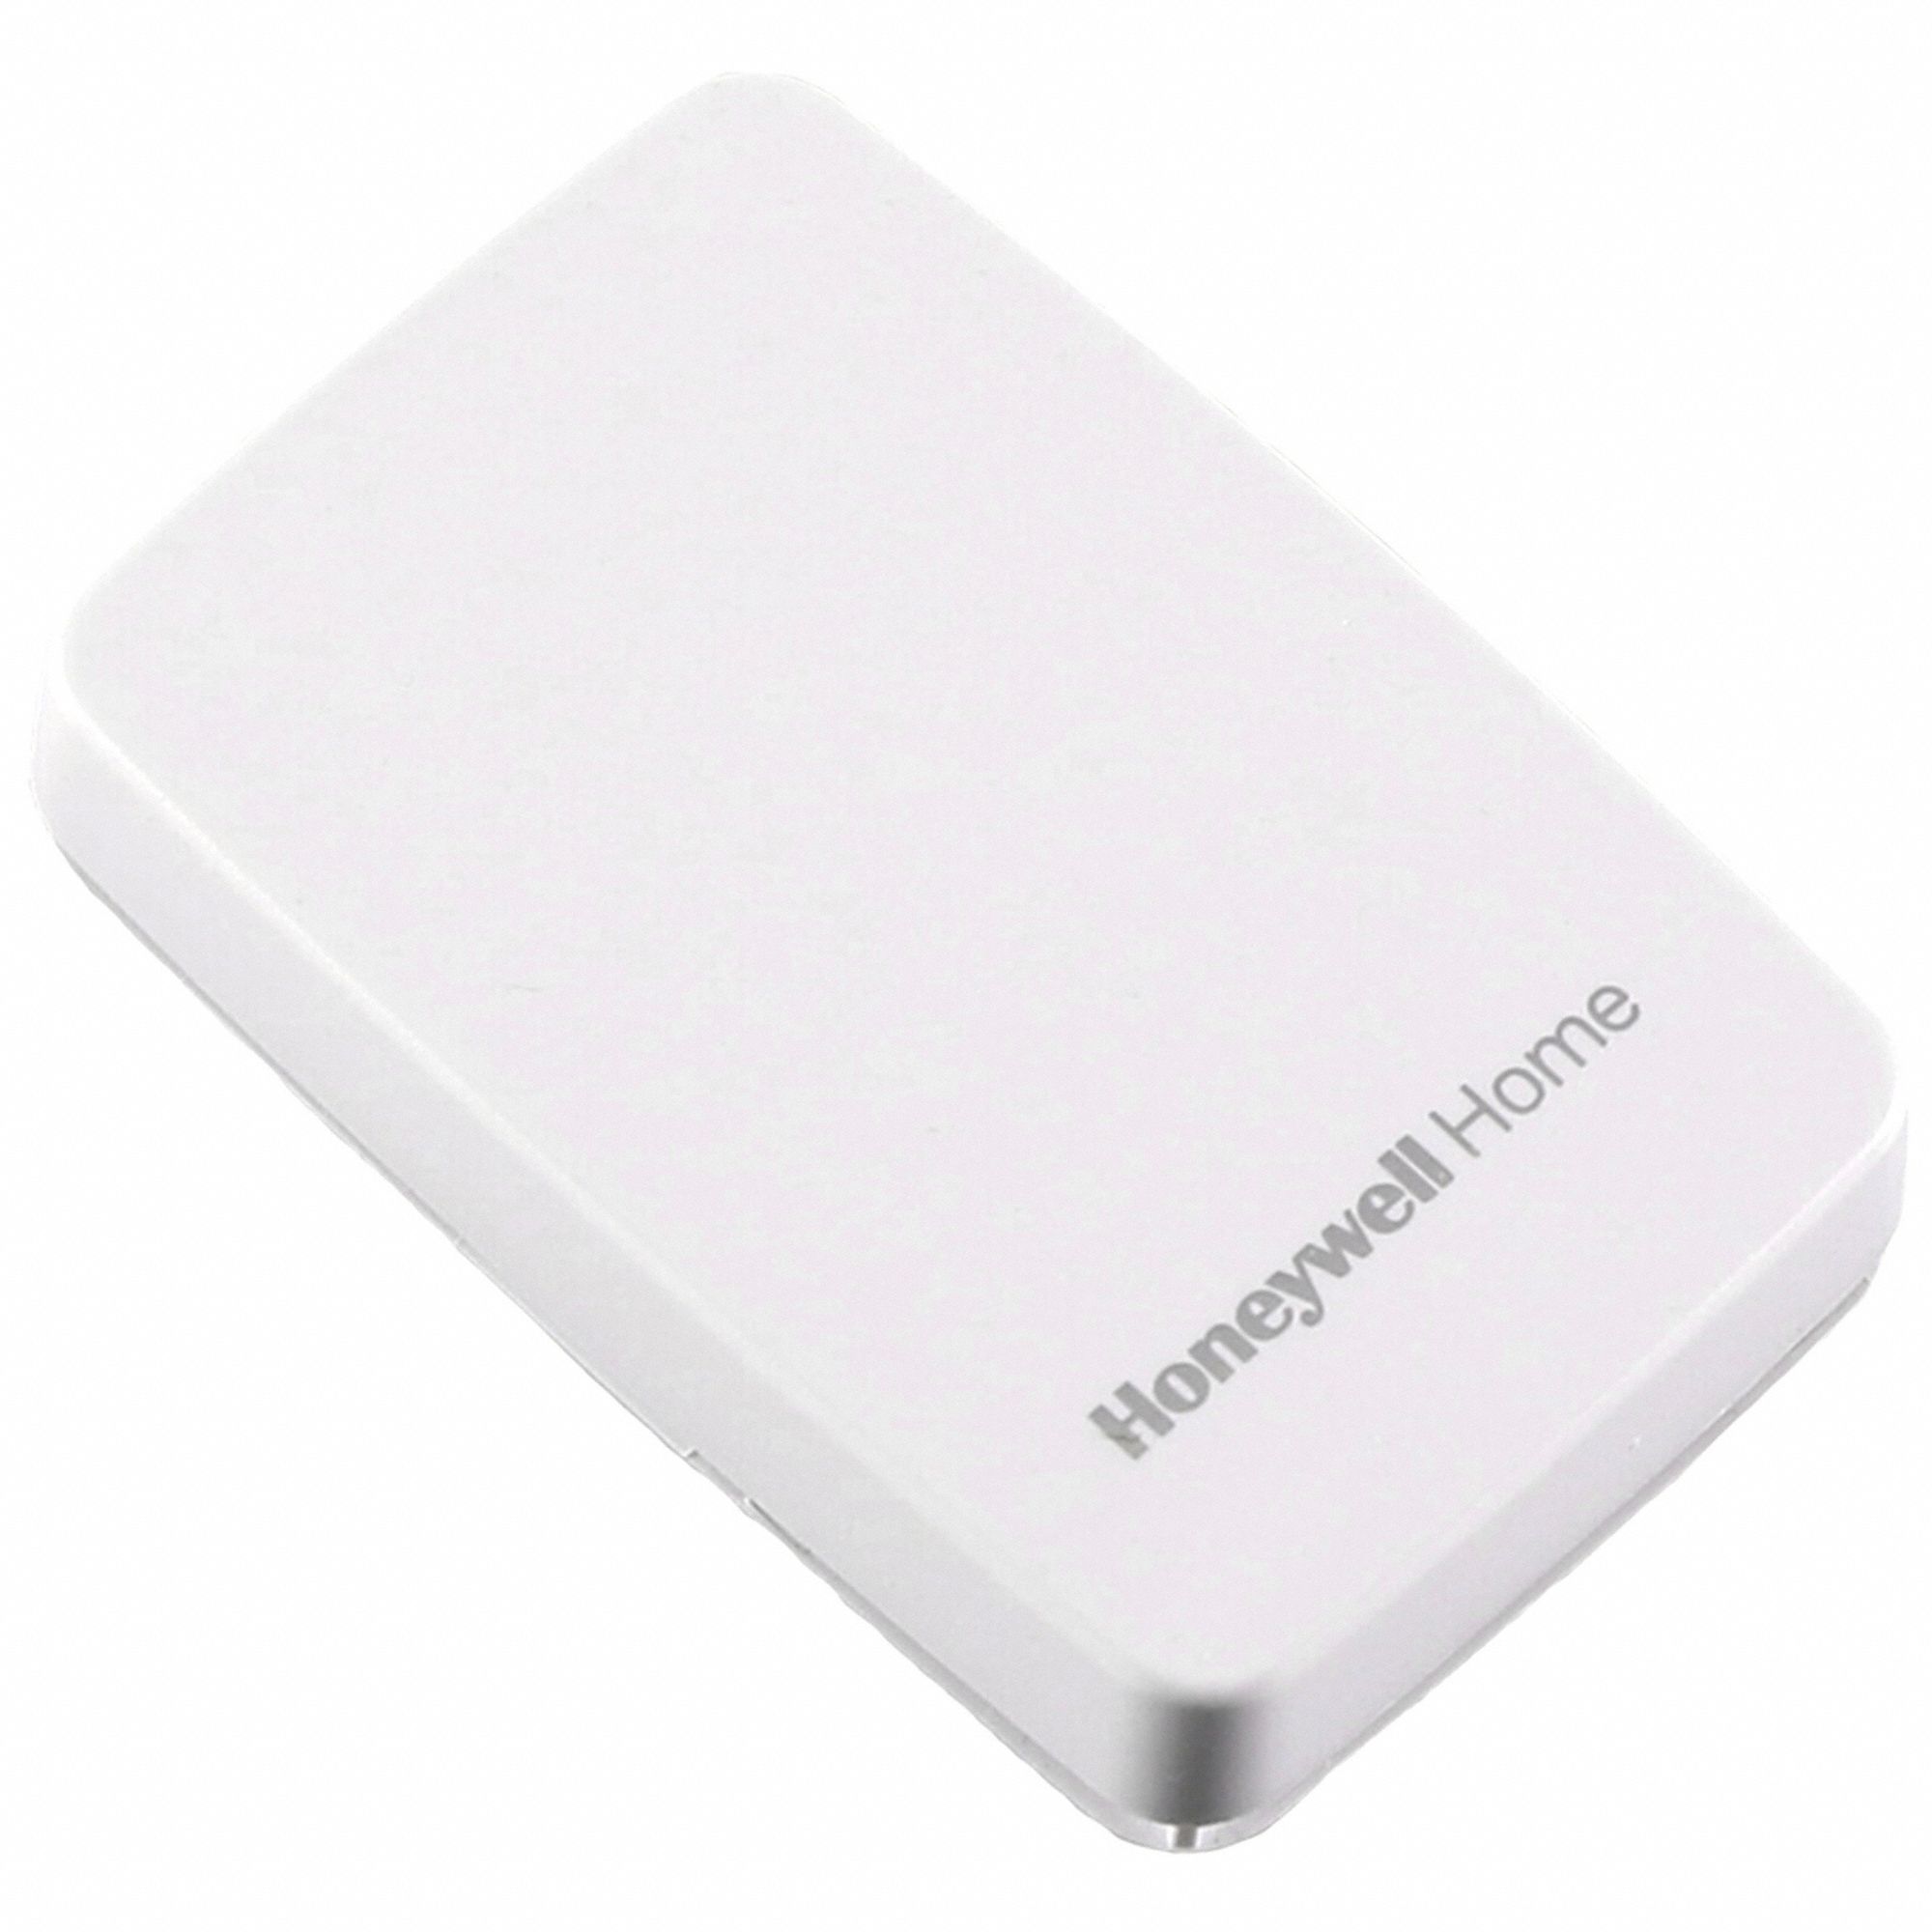 Honeywell C7189U1005 Remote Indoor Sensor - White